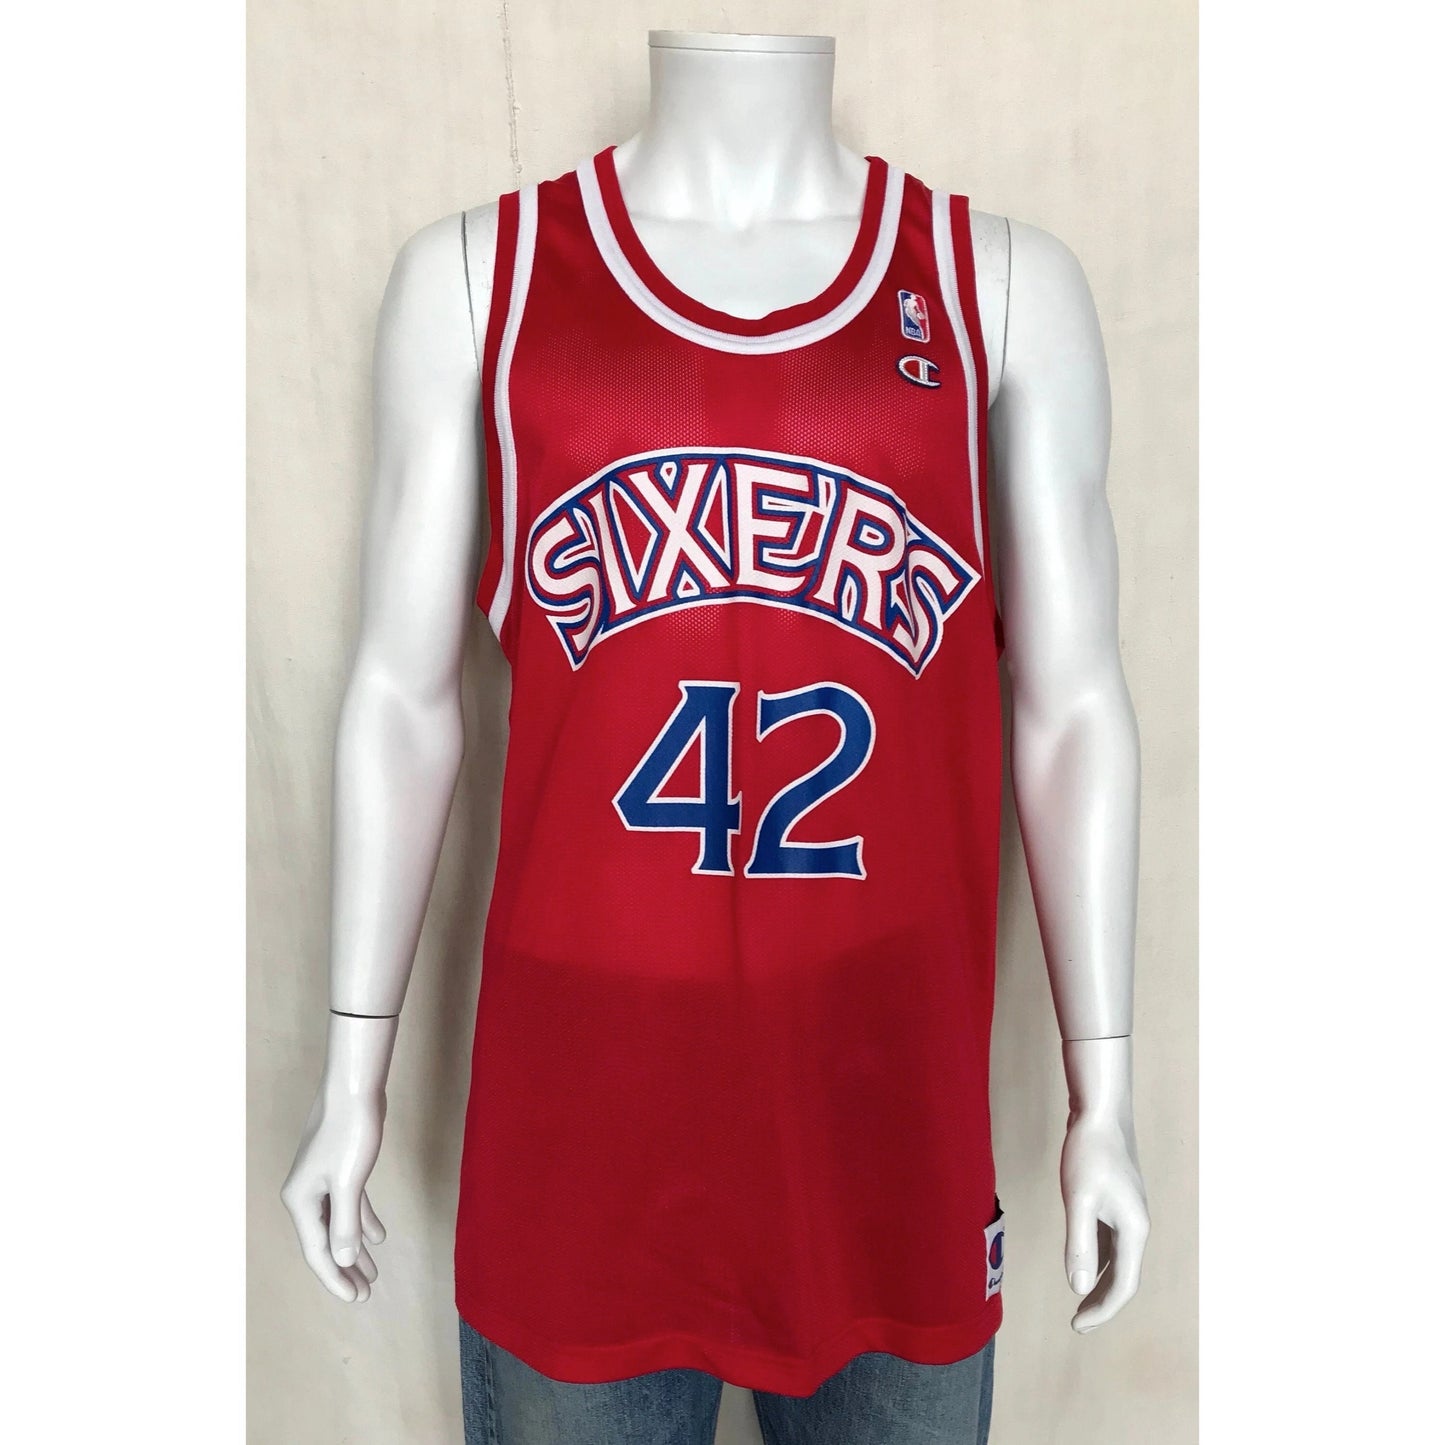 Vintage 90s Champion Jerry Stackhouse #42 Phila 76ers NBA Jersey